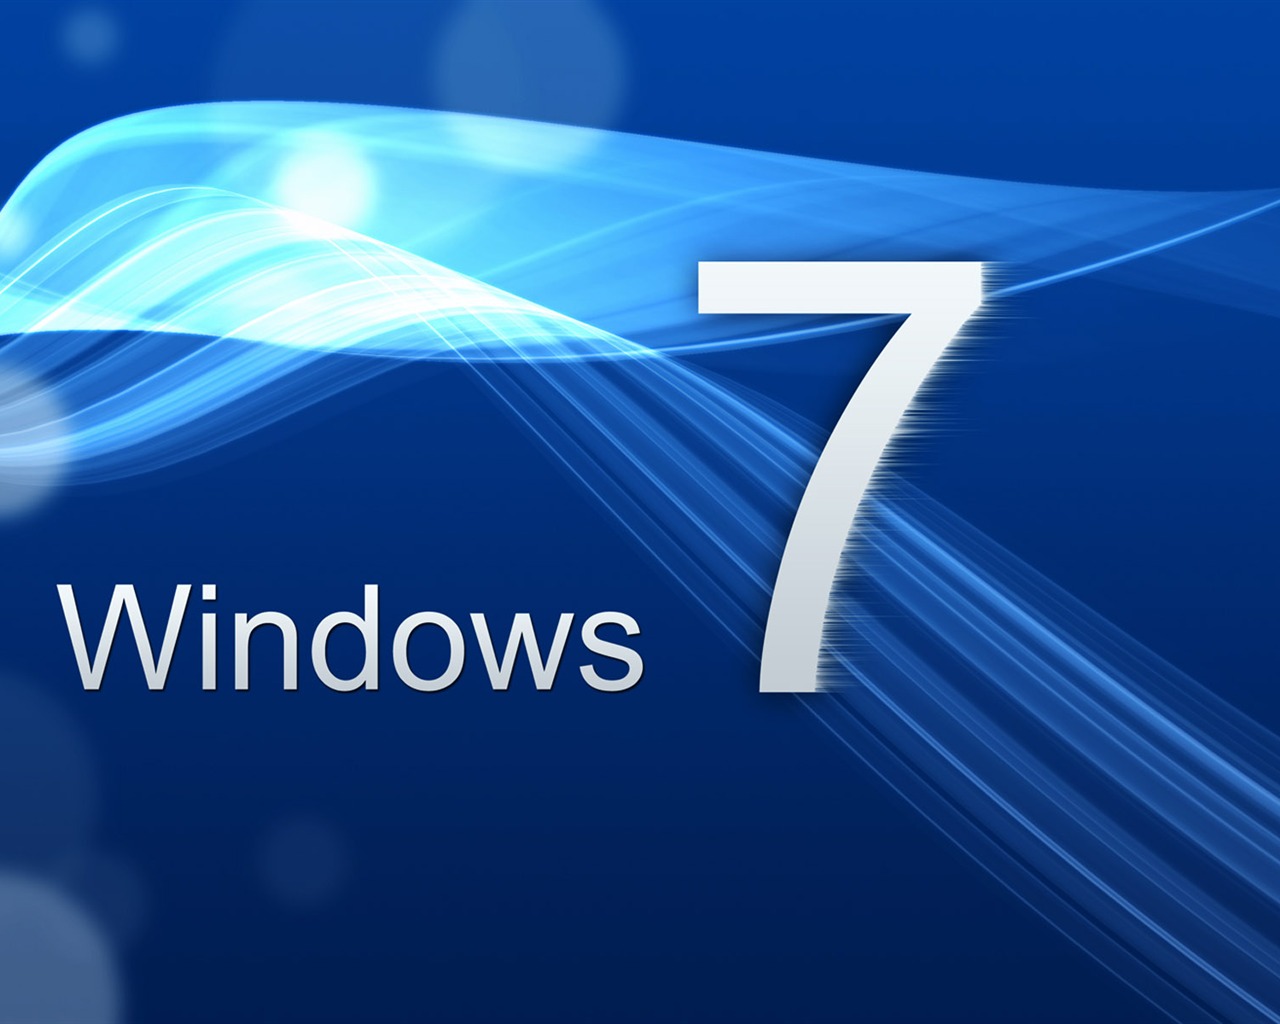 Windows 7 Wallpaper Themes Download 1280x1024 #32 Wallpaper ...